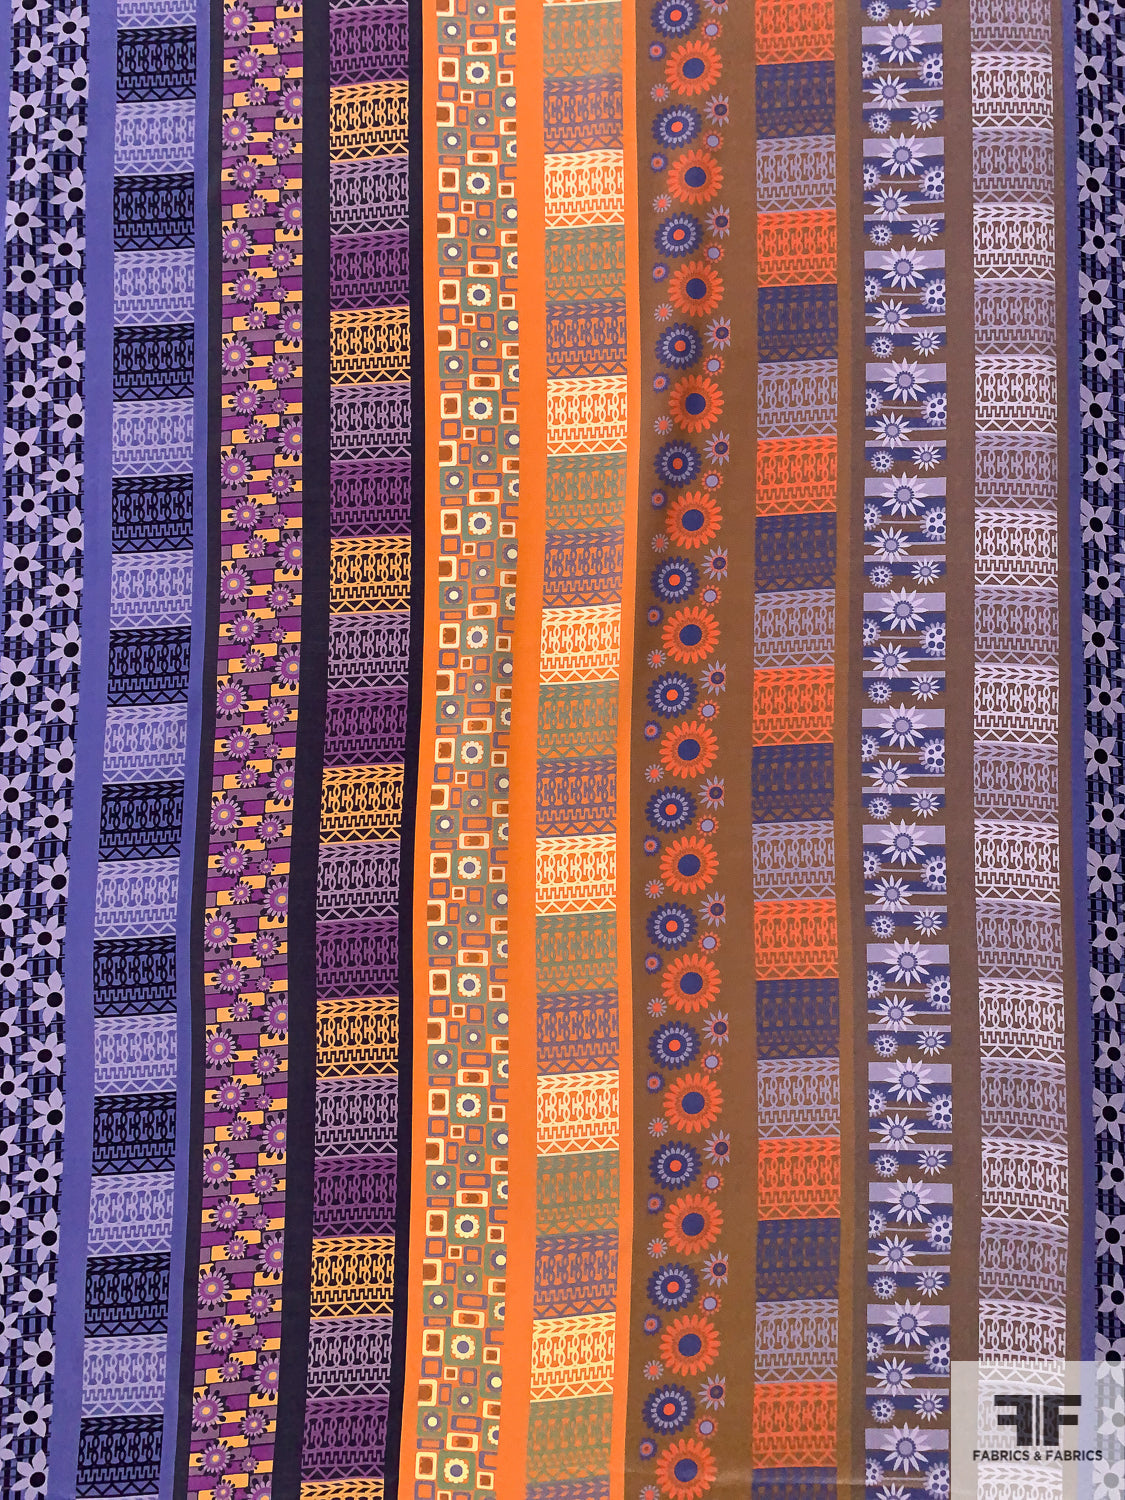 Boho Chic Printed Silk Crepe de Chine - Purples / Oranges / Taupe Brown